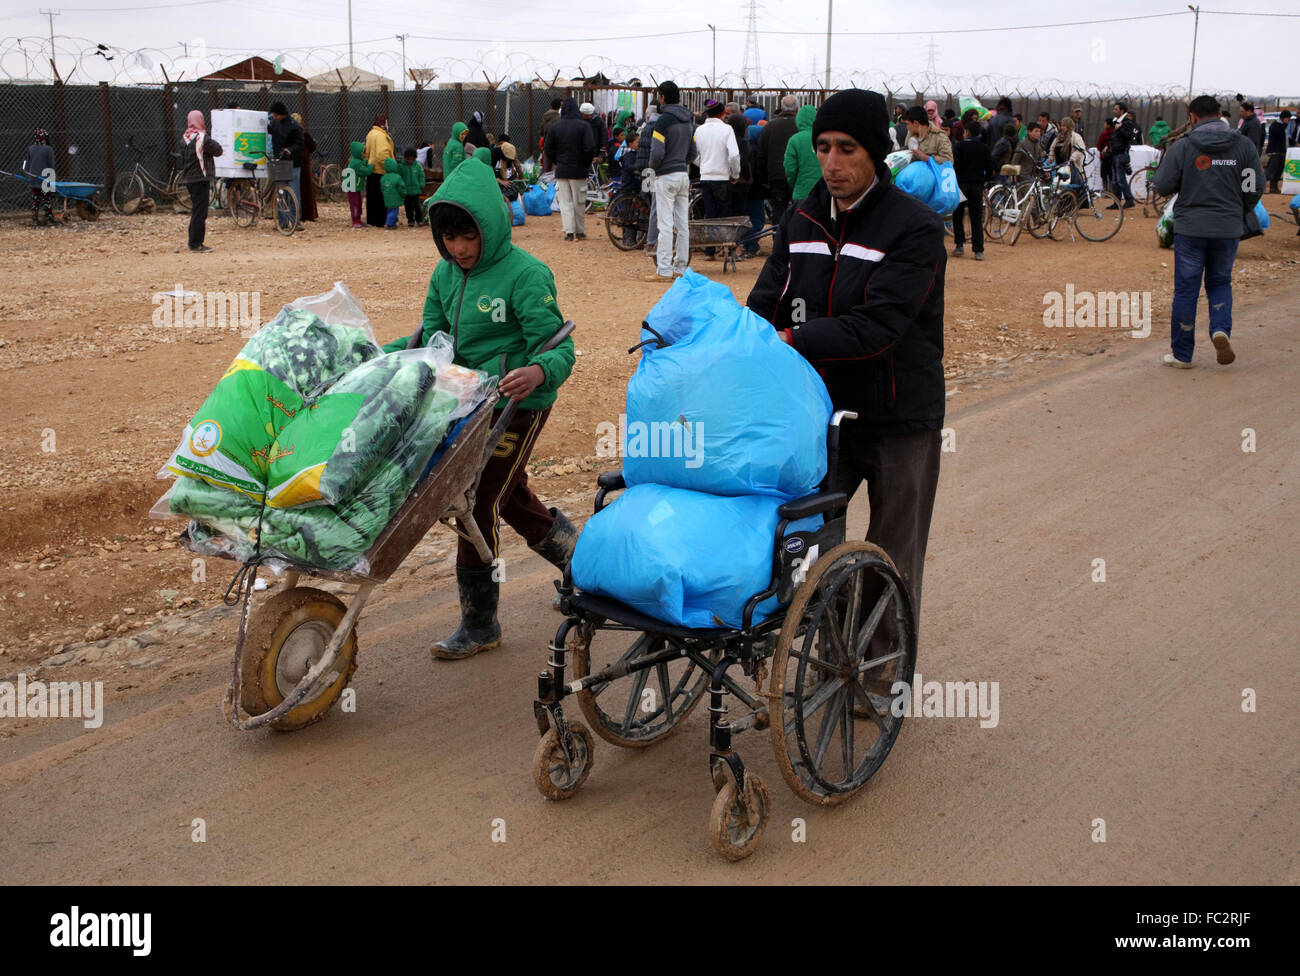 (160120) -- MAFRAQ, Jan. 20, 2016 (Xinhua) -- Syrian refugees take aid packages at Al Zaatari refugee camp in the Jordanian city of Mafraq, near the border with Syria, Jan. 20, 2016. (Xinhua/Mohammad Abu Ghosh) Stock Photo